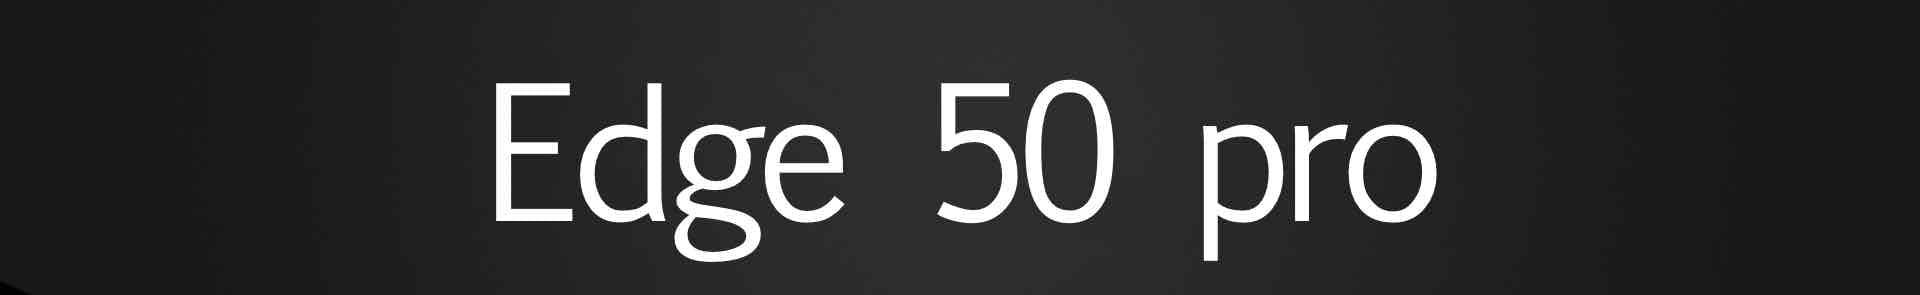 Moto Edge 50 pro